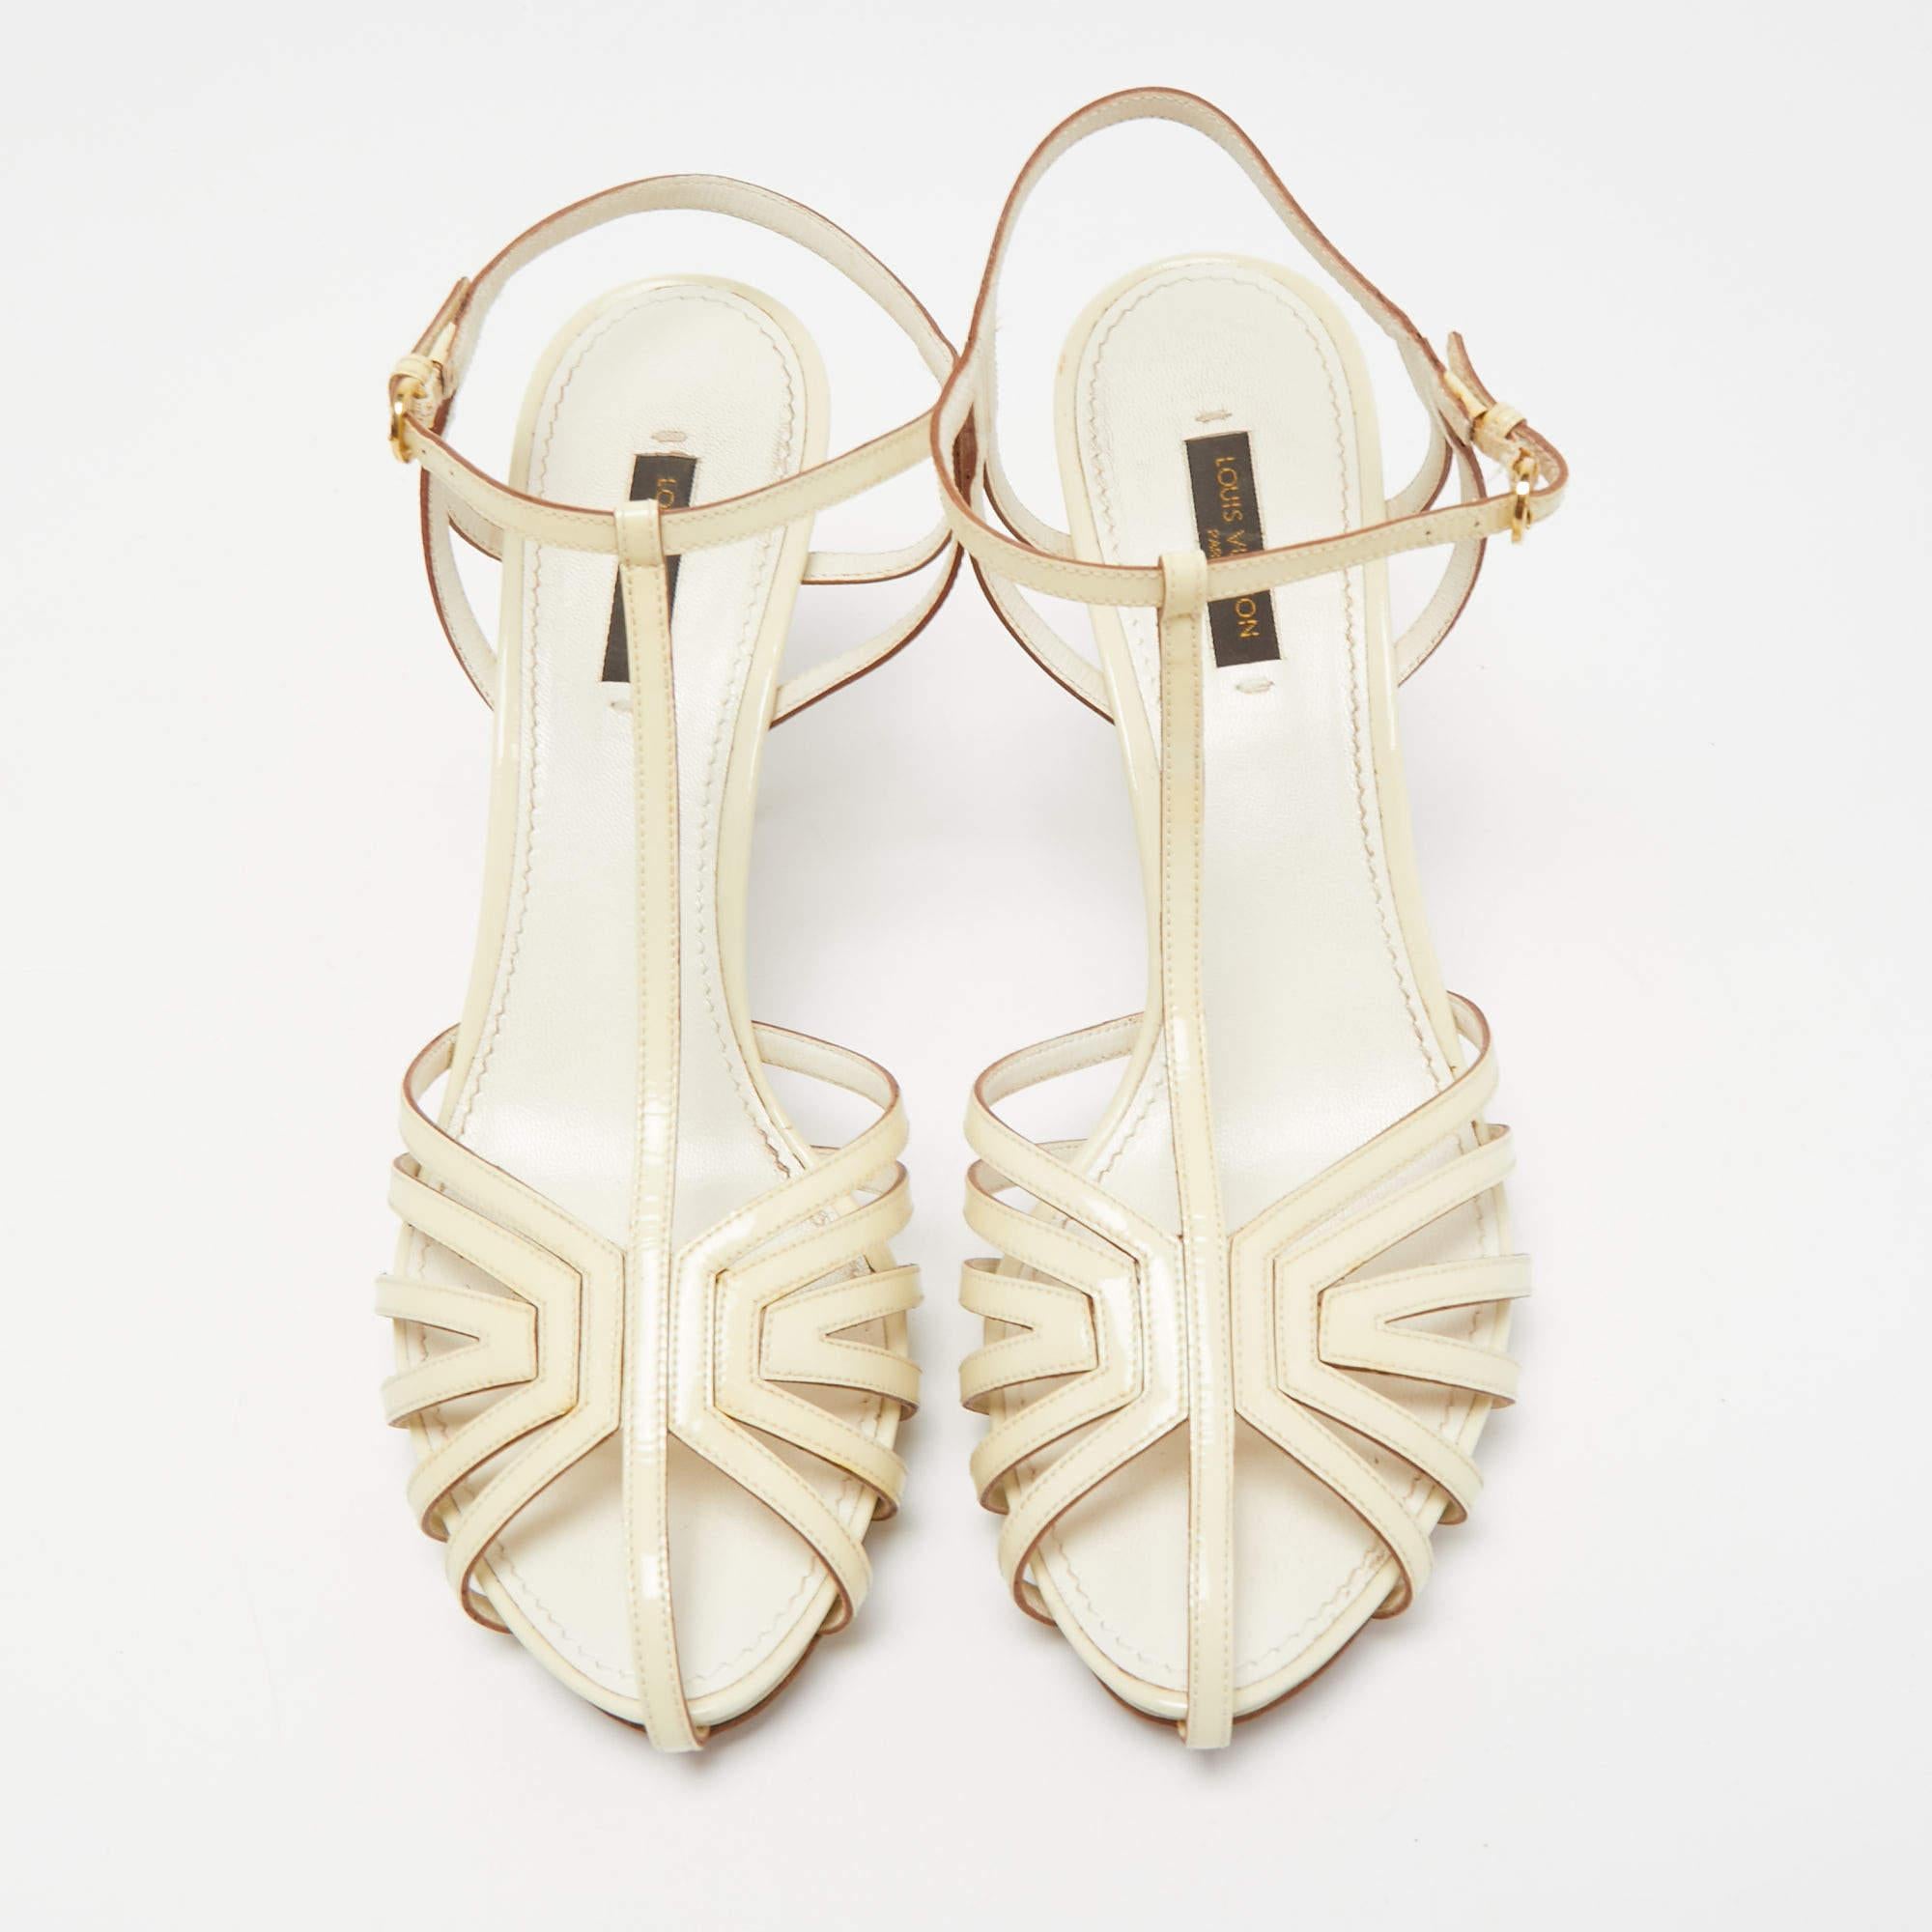 Beige Louis Vuitton Cream Patent Leather Ankle Strap Sandals Size 39